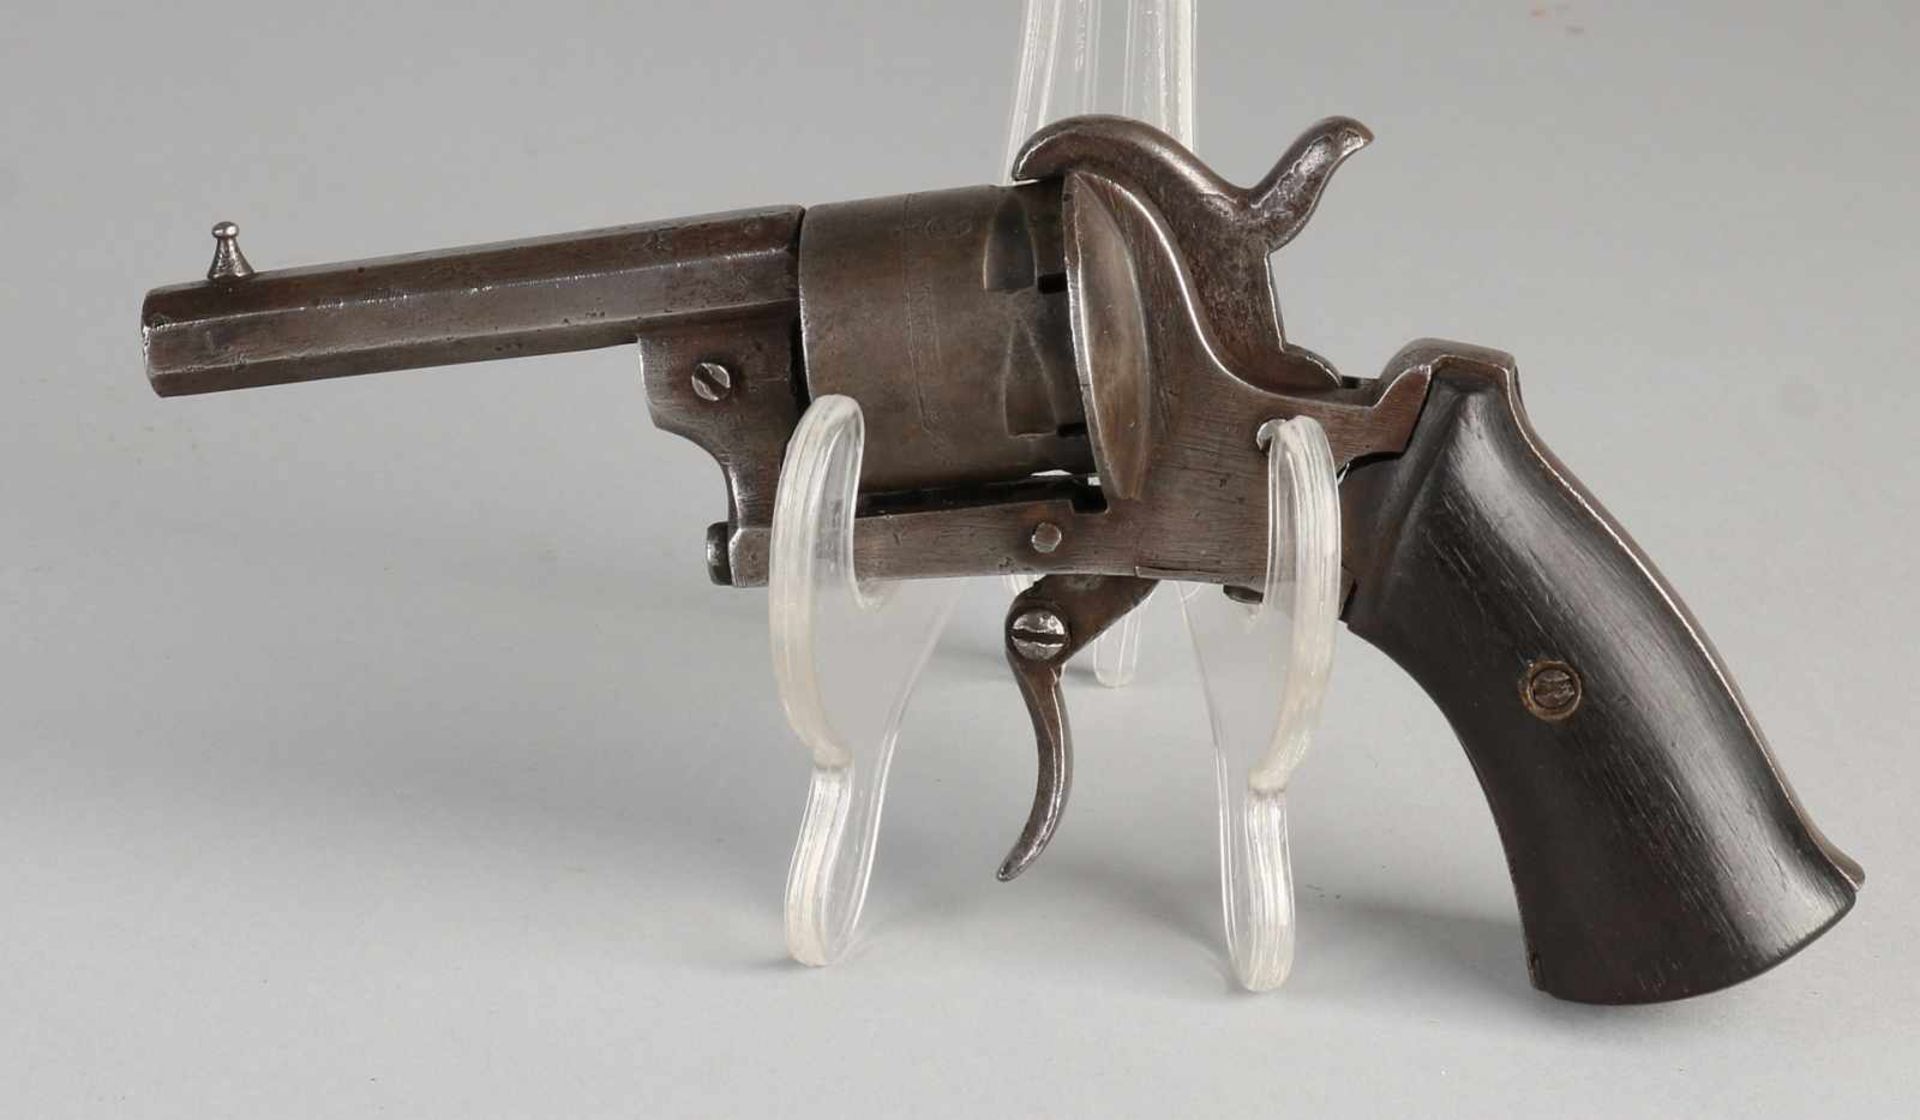 Penvuur antique revolver. Marked ELG + number. Octagonal barrel. Size: L 16 cm. In good condition. - Image 2 of 2